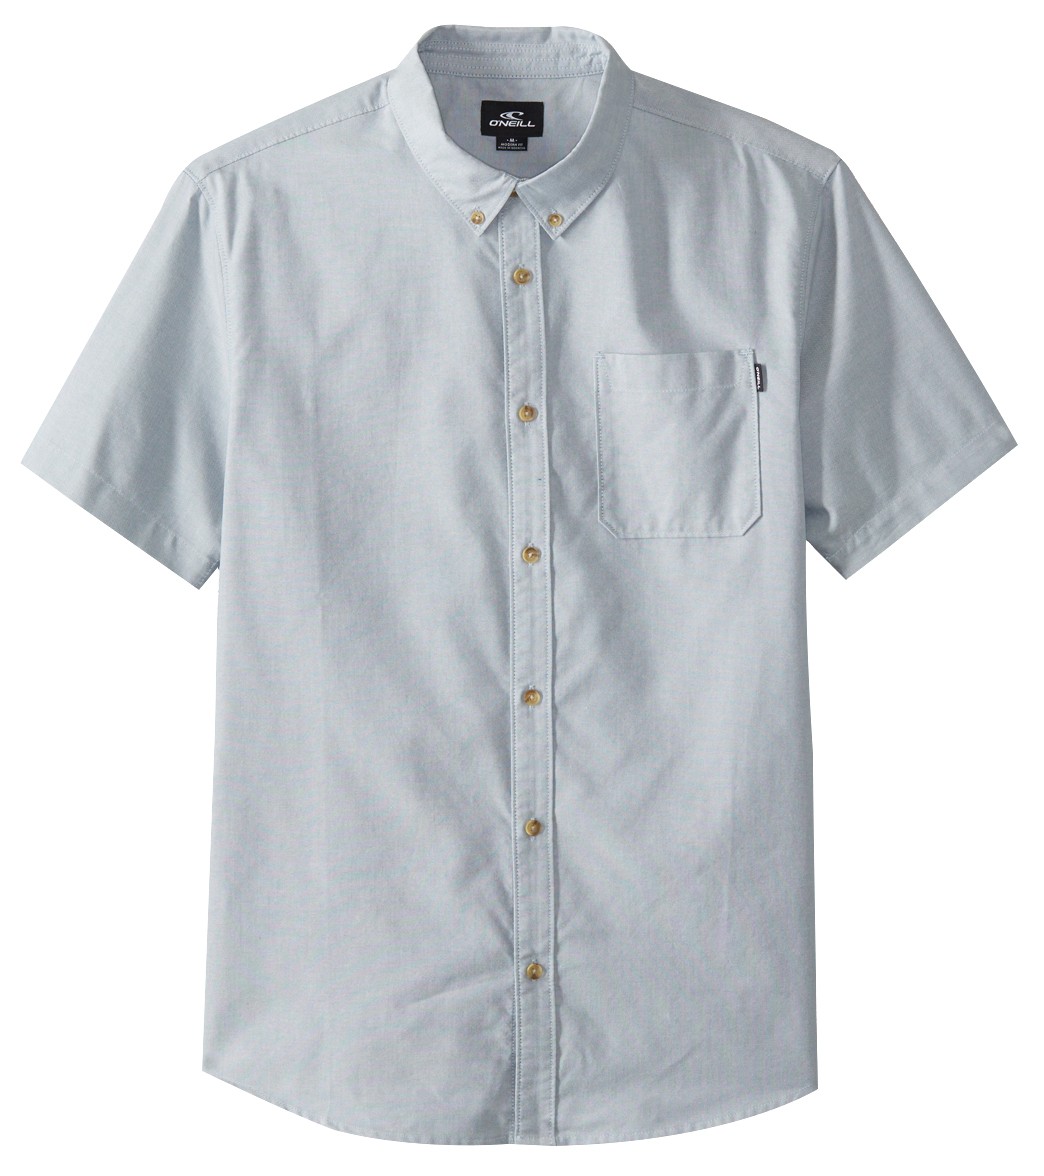 O'neill Men's Banks Shirt - Dust Blue Small Cotton/Polyester - Swimoutlet.com